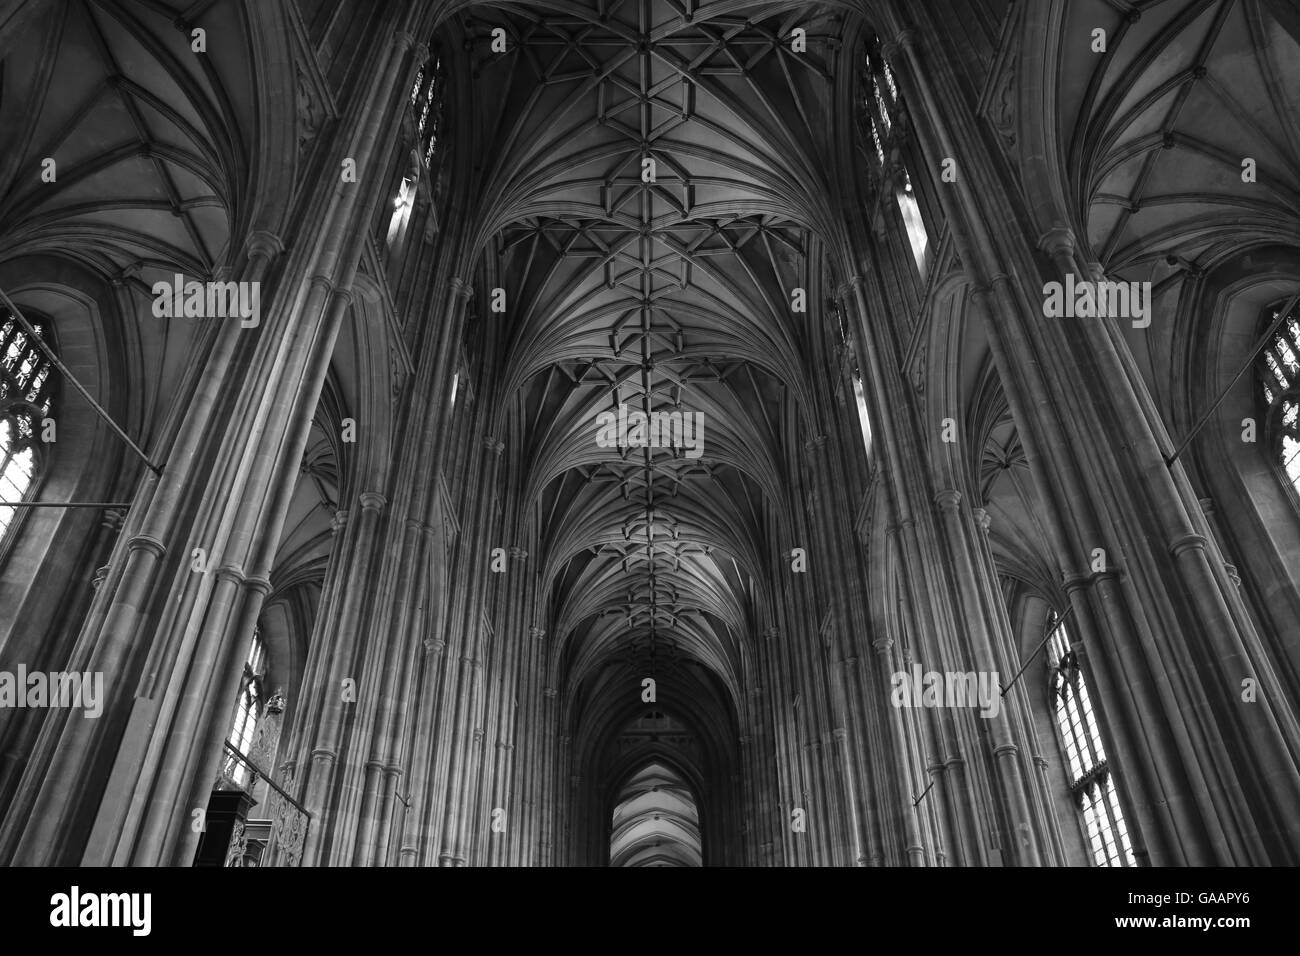 Plafond de la nef. La Cathédrale de Canterbury. Canterbury, Angleterre. Banque D'Images